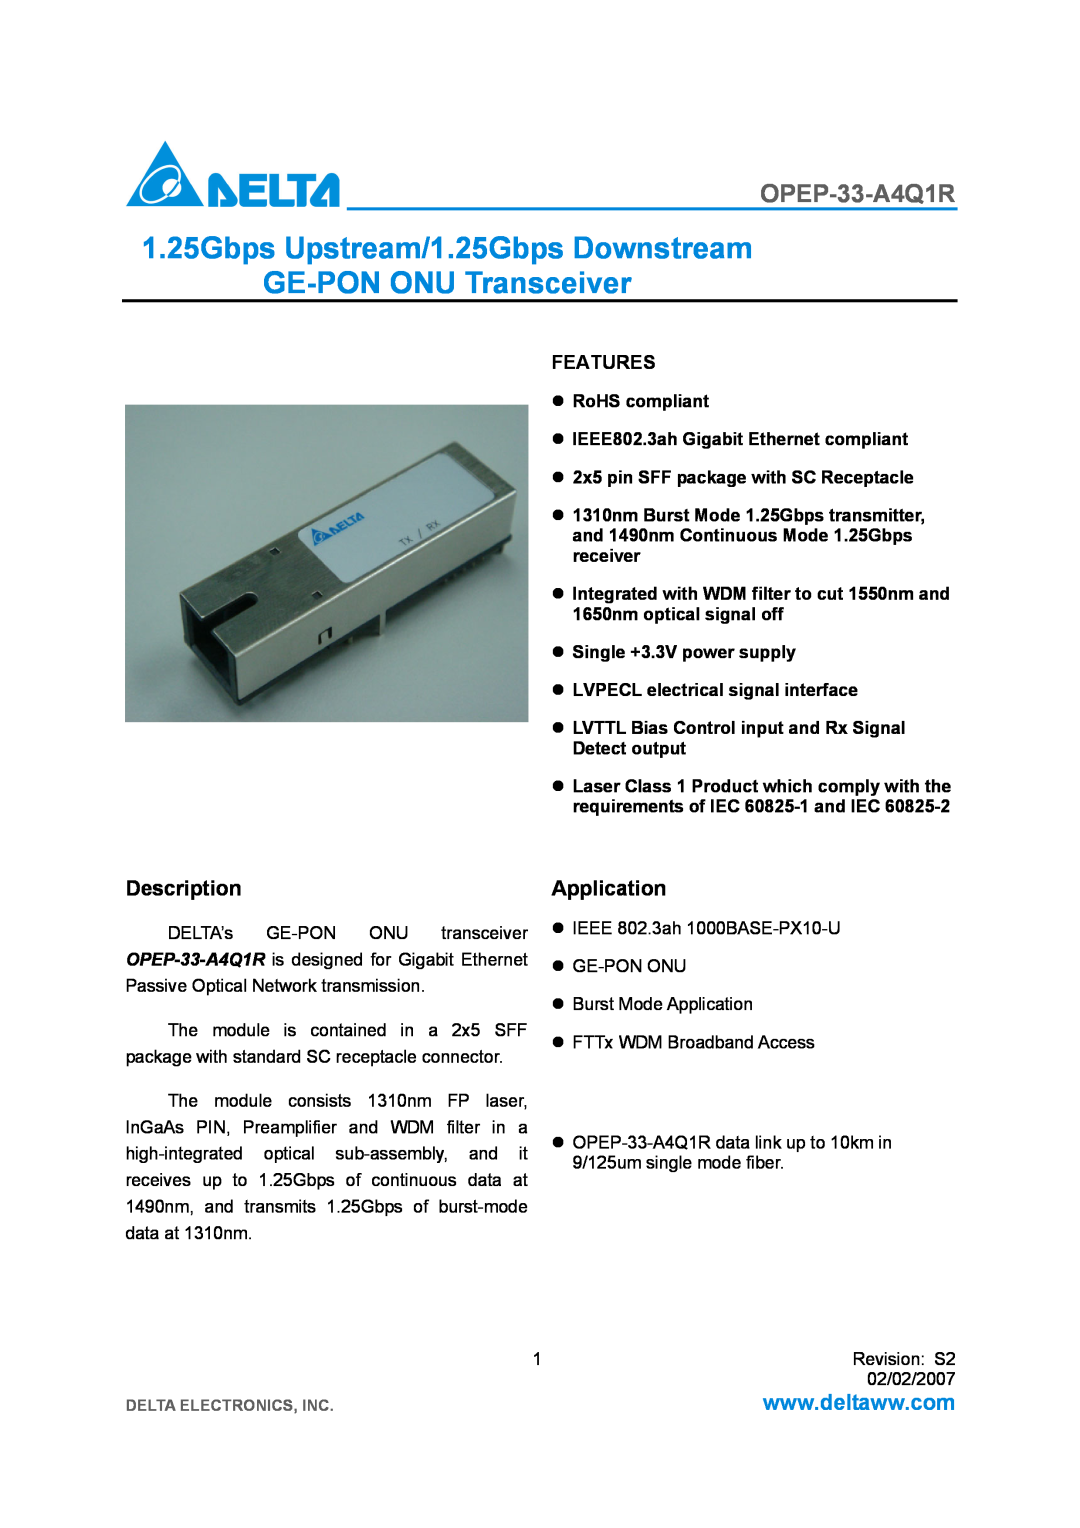 Delta Electronics OPEP-33-A4Q1R manual Description, Application, Features 